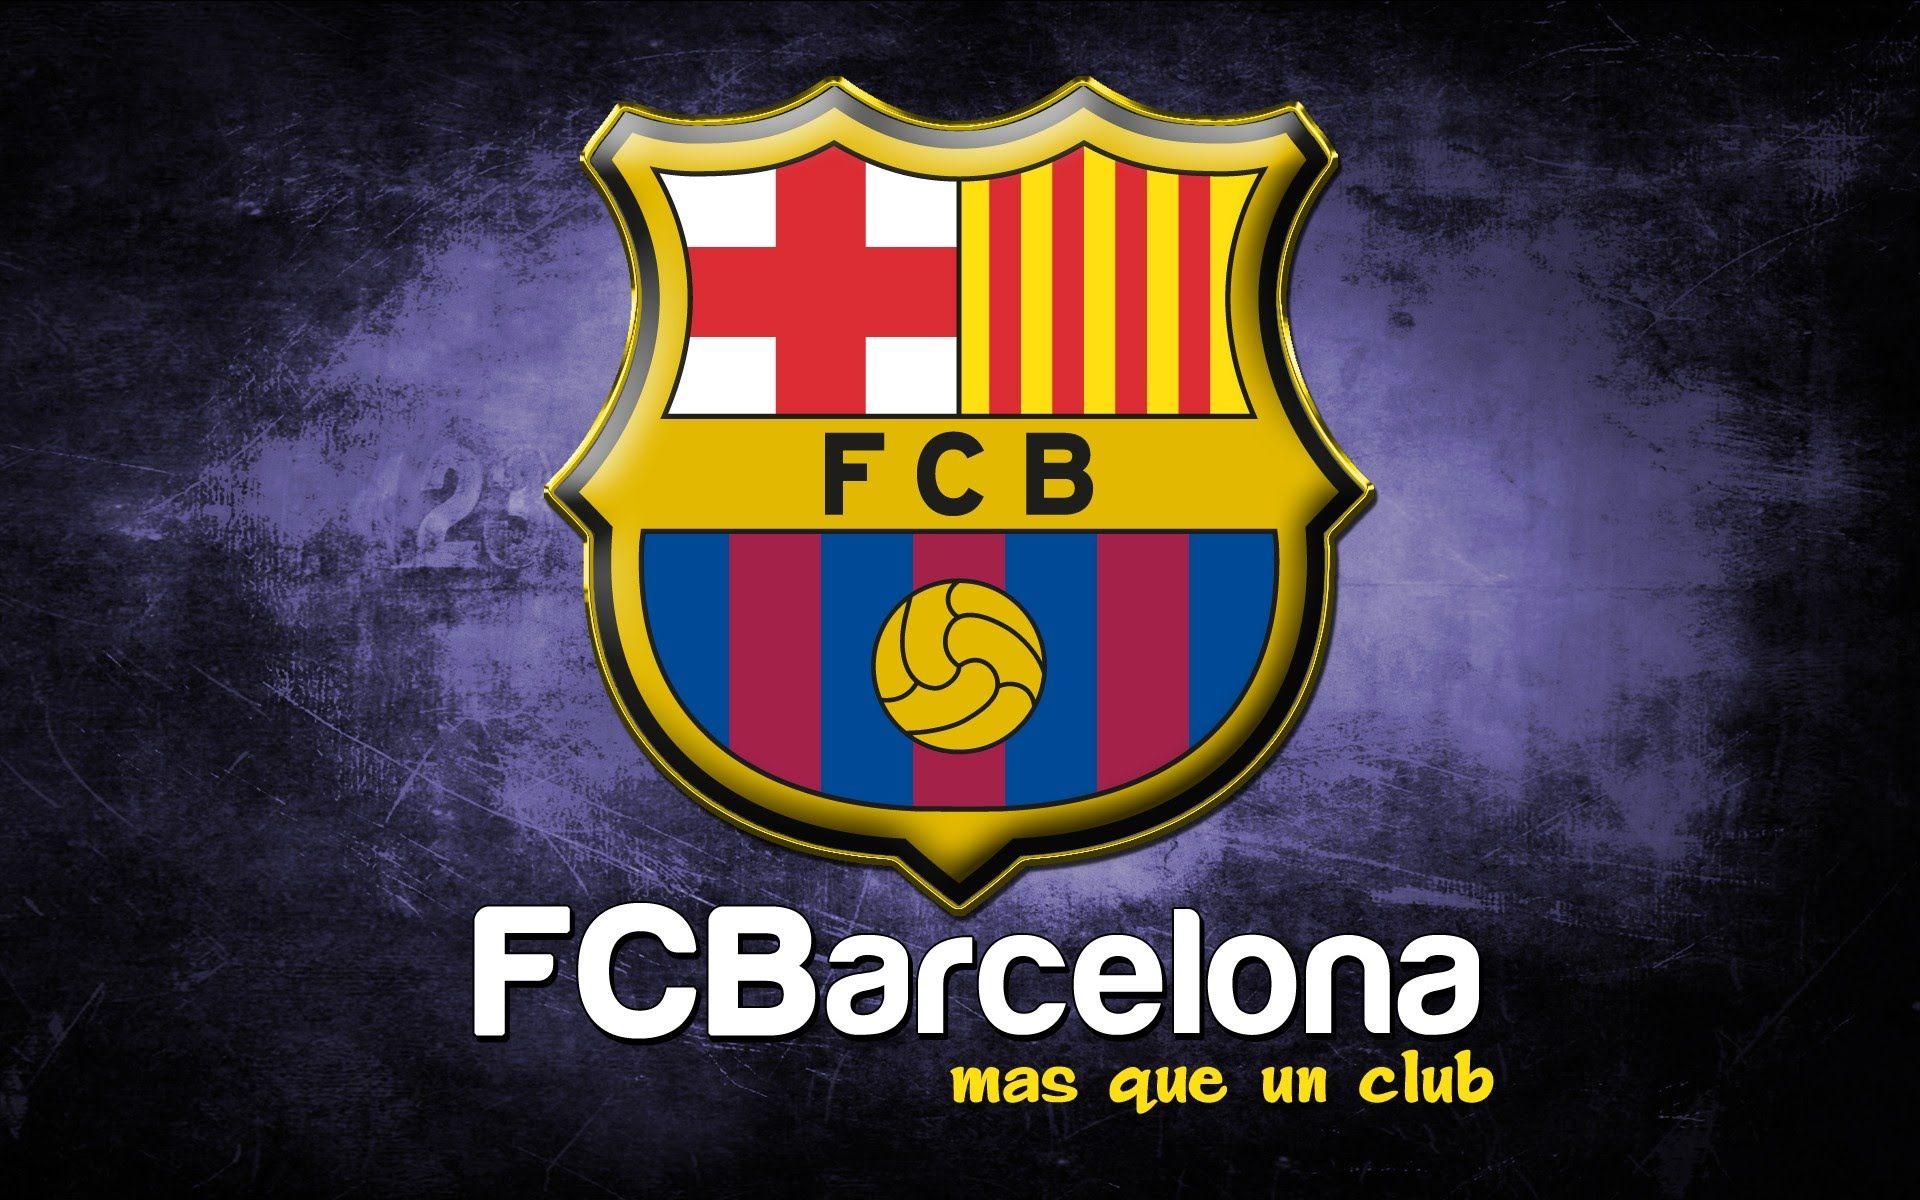 FC Barcelona Champions League 2015 victory fan celebrations at Las